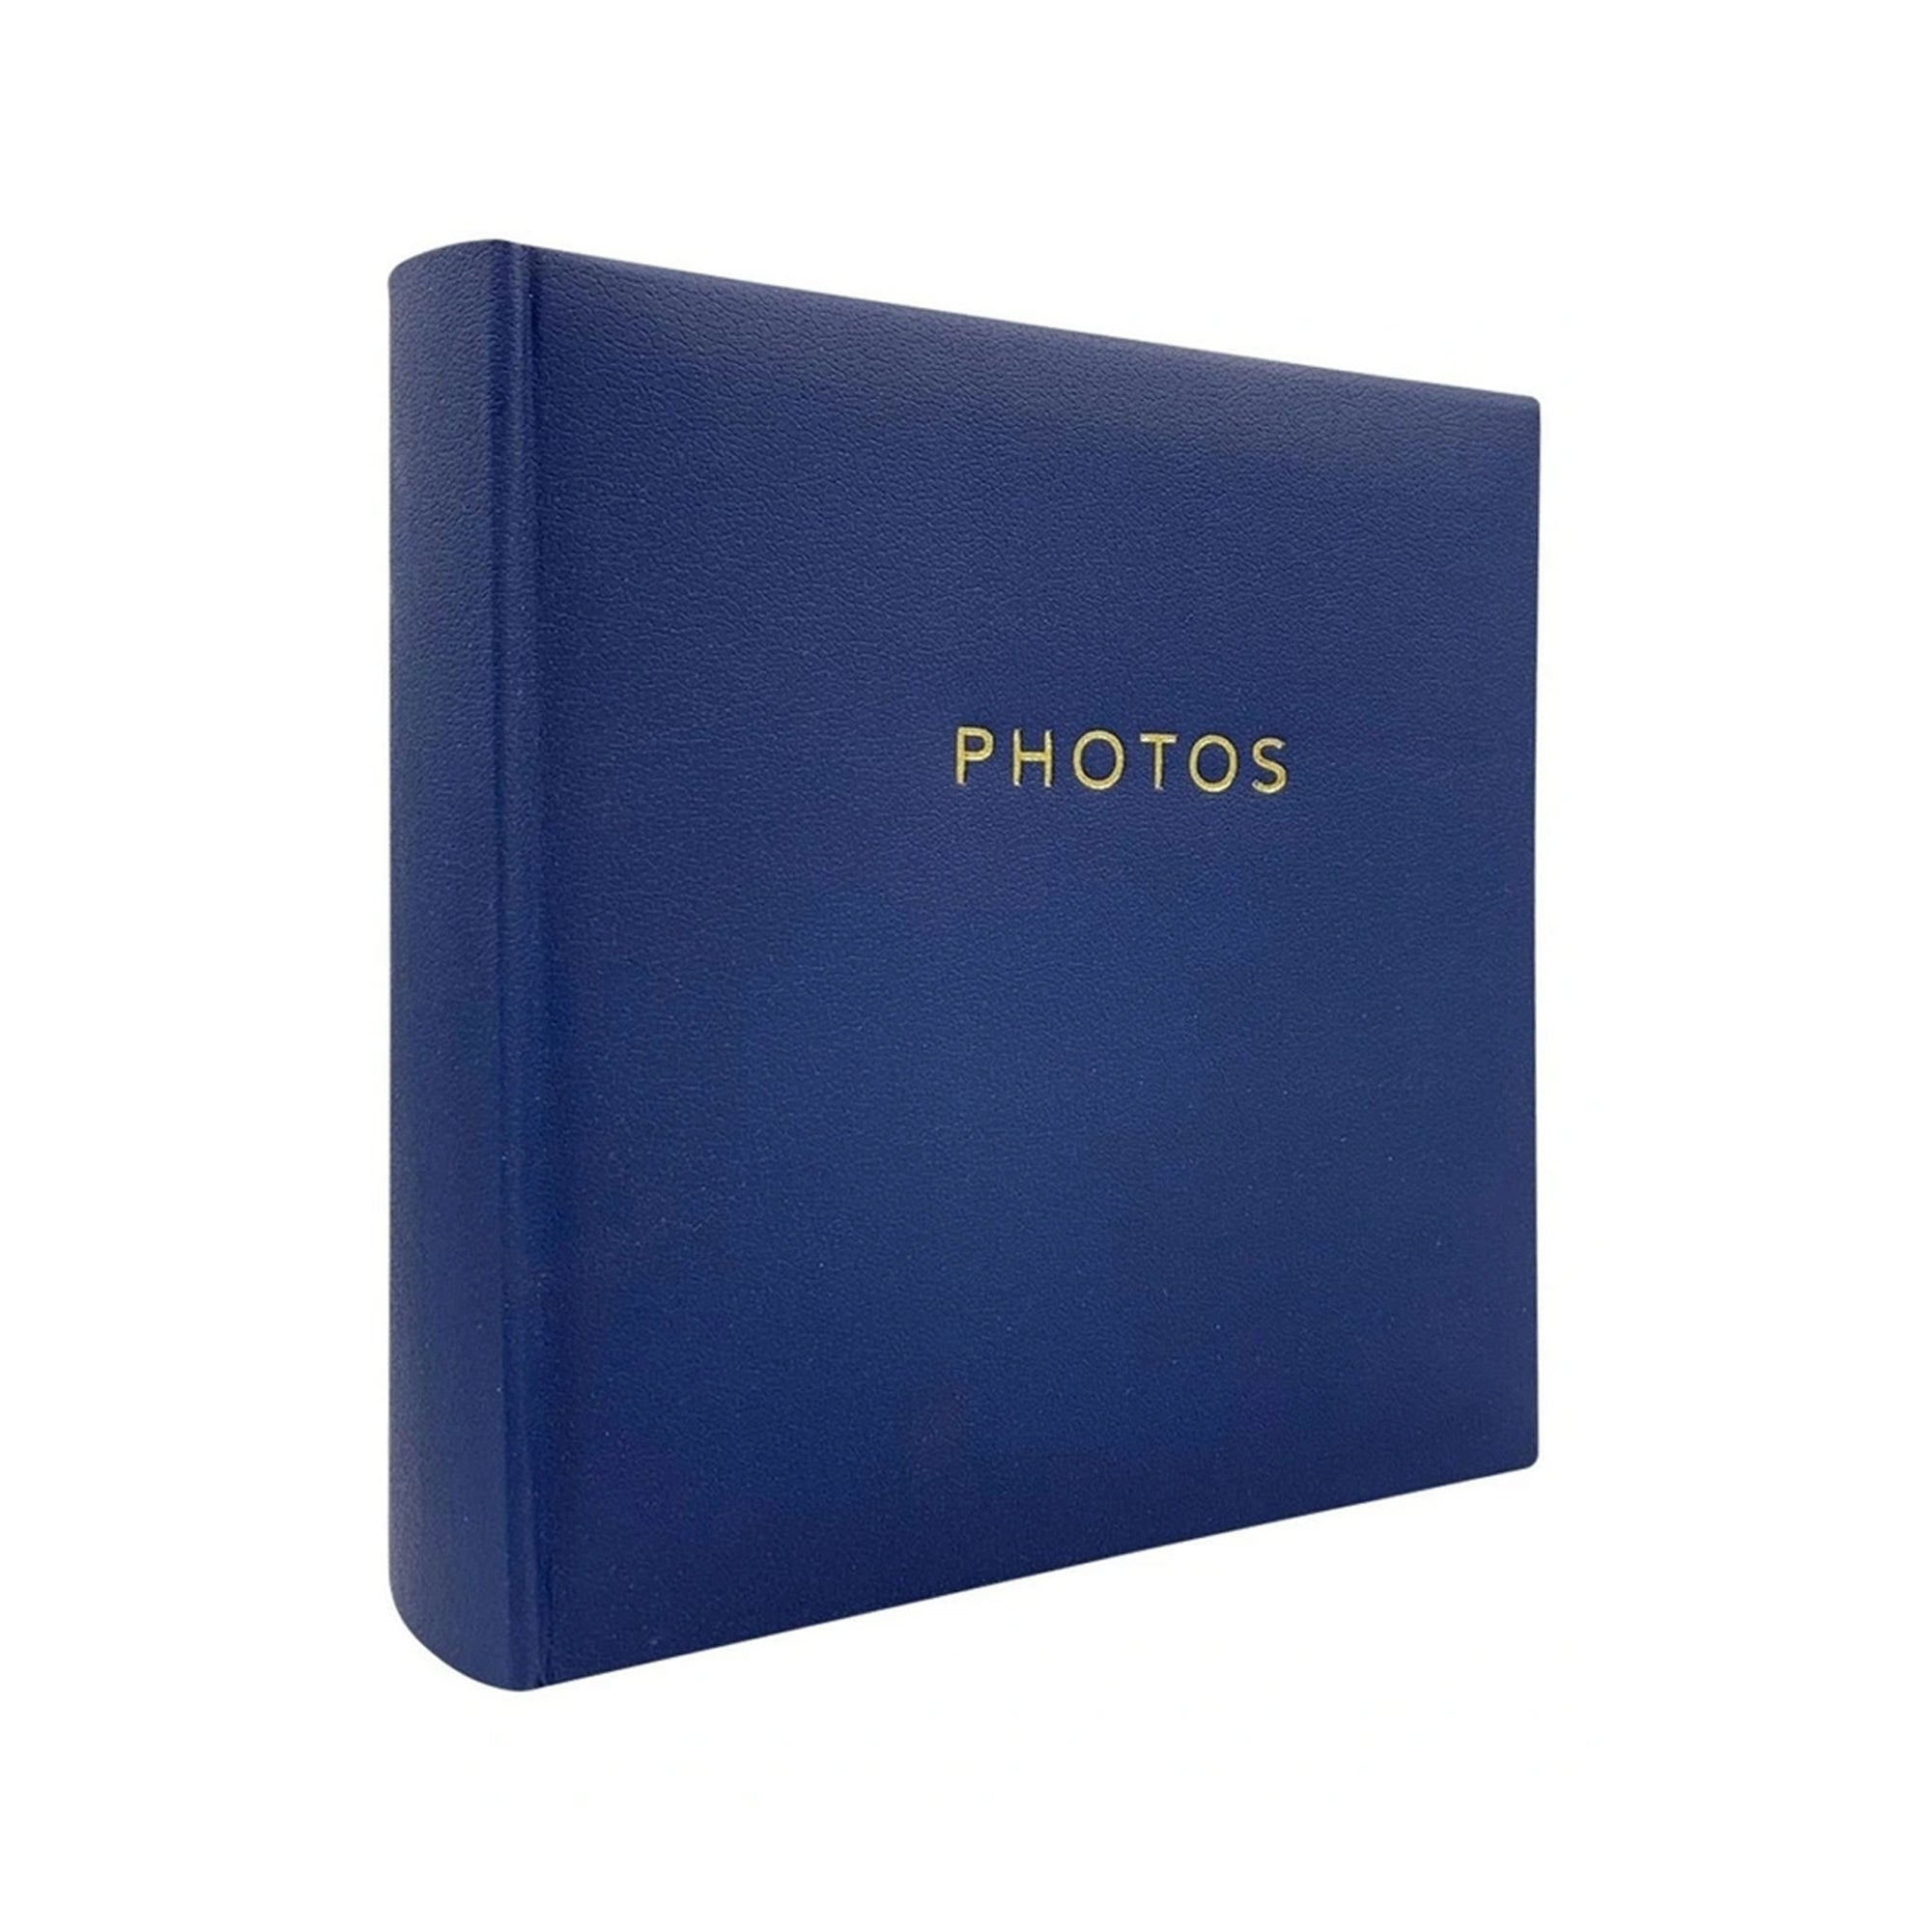 Buy ZEP Photo album Light blue - 402 Pictures in 11x15 cm here